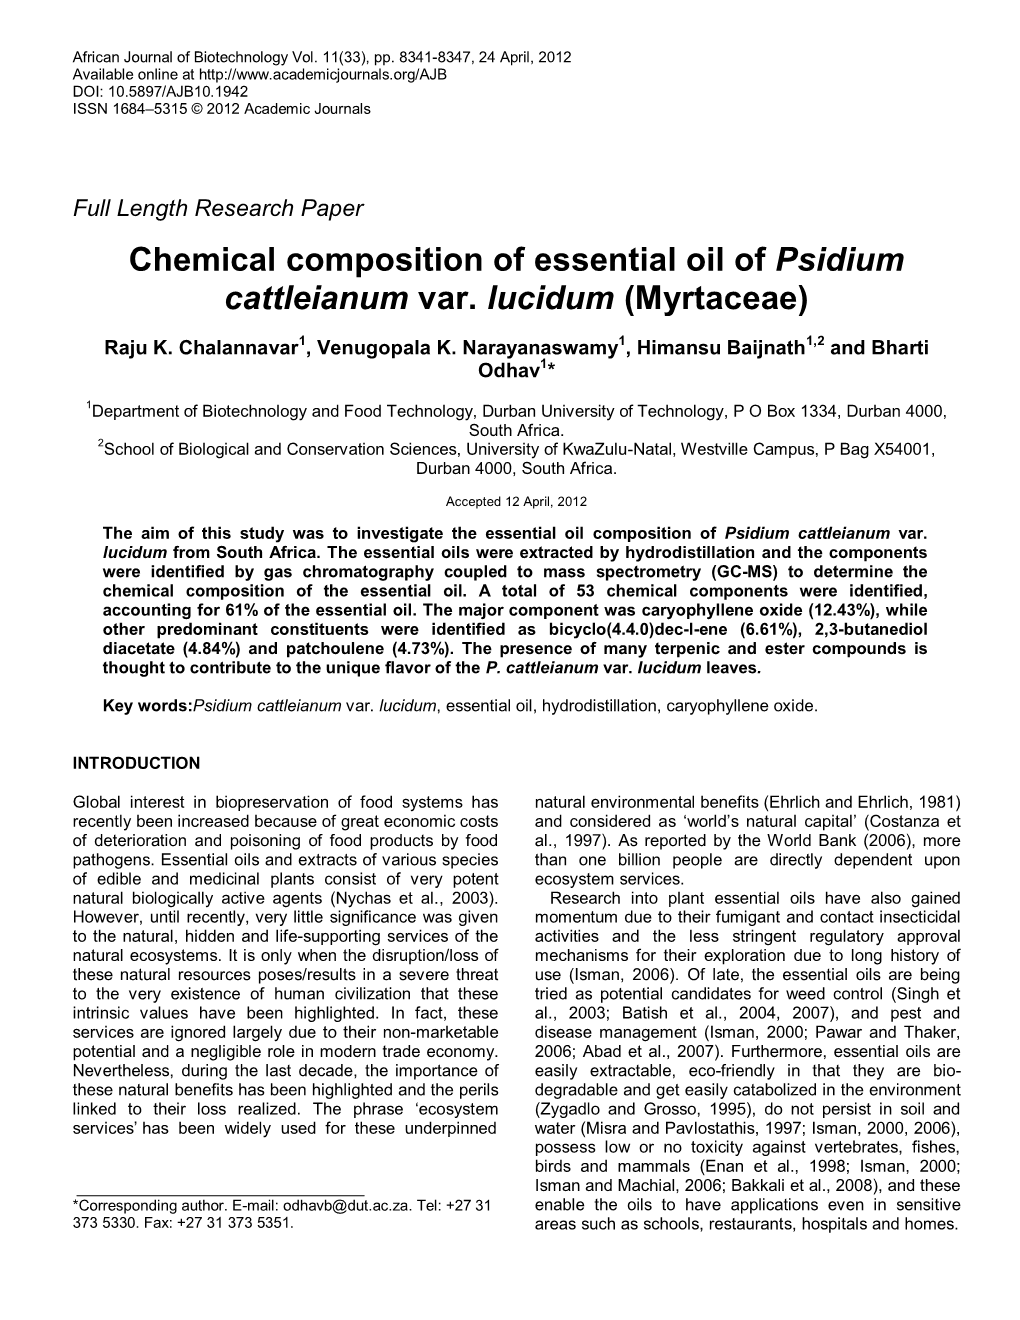 Chemical Composition of Essential Oil from Psidium Cattleianum Var. Lucidum